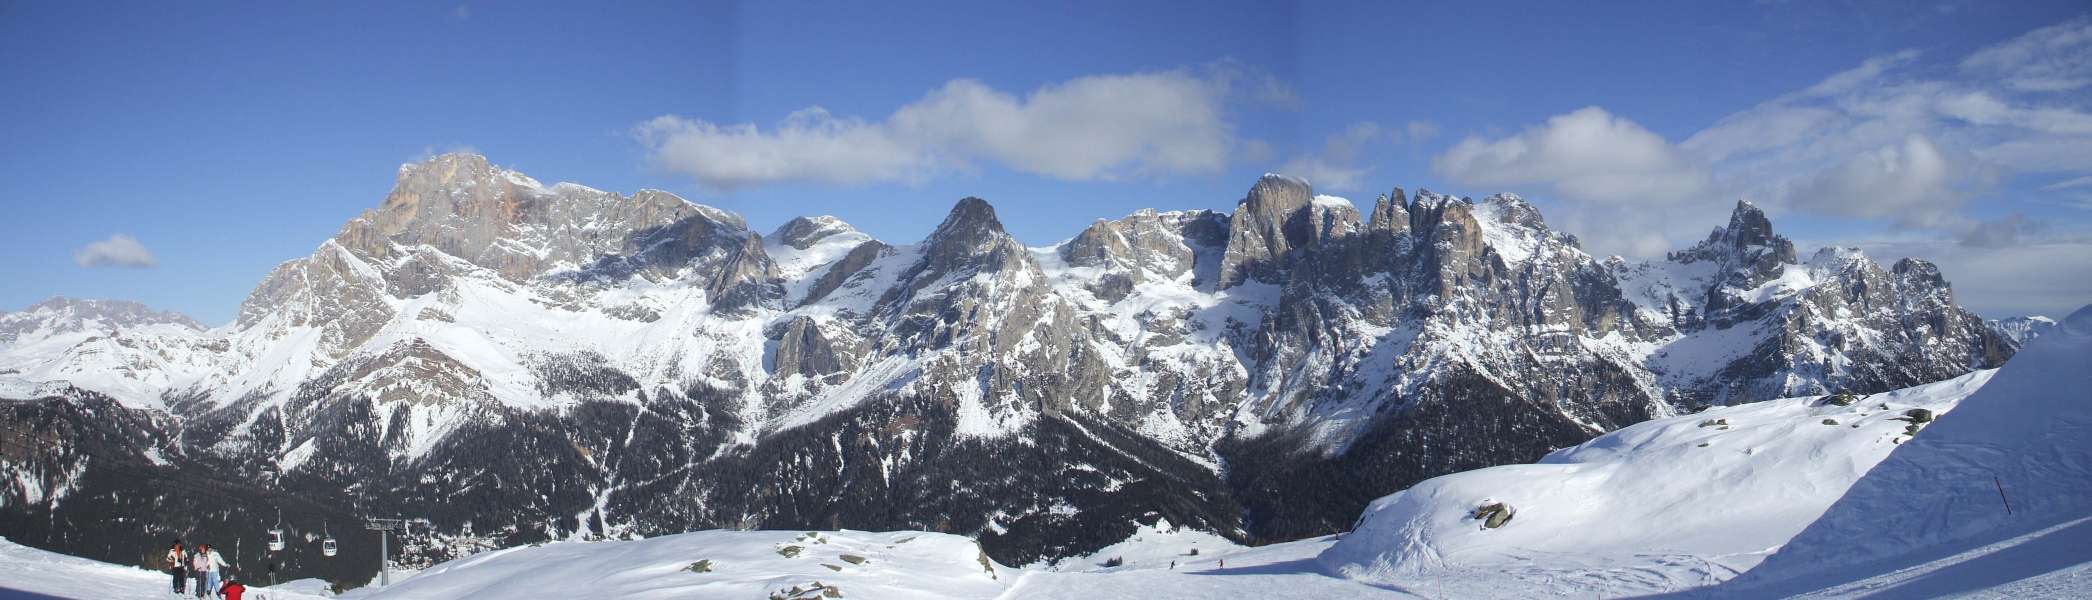 View of Alpi in San Martino di Castrozza in Trentino: 154 KB; click on the image to enlarge